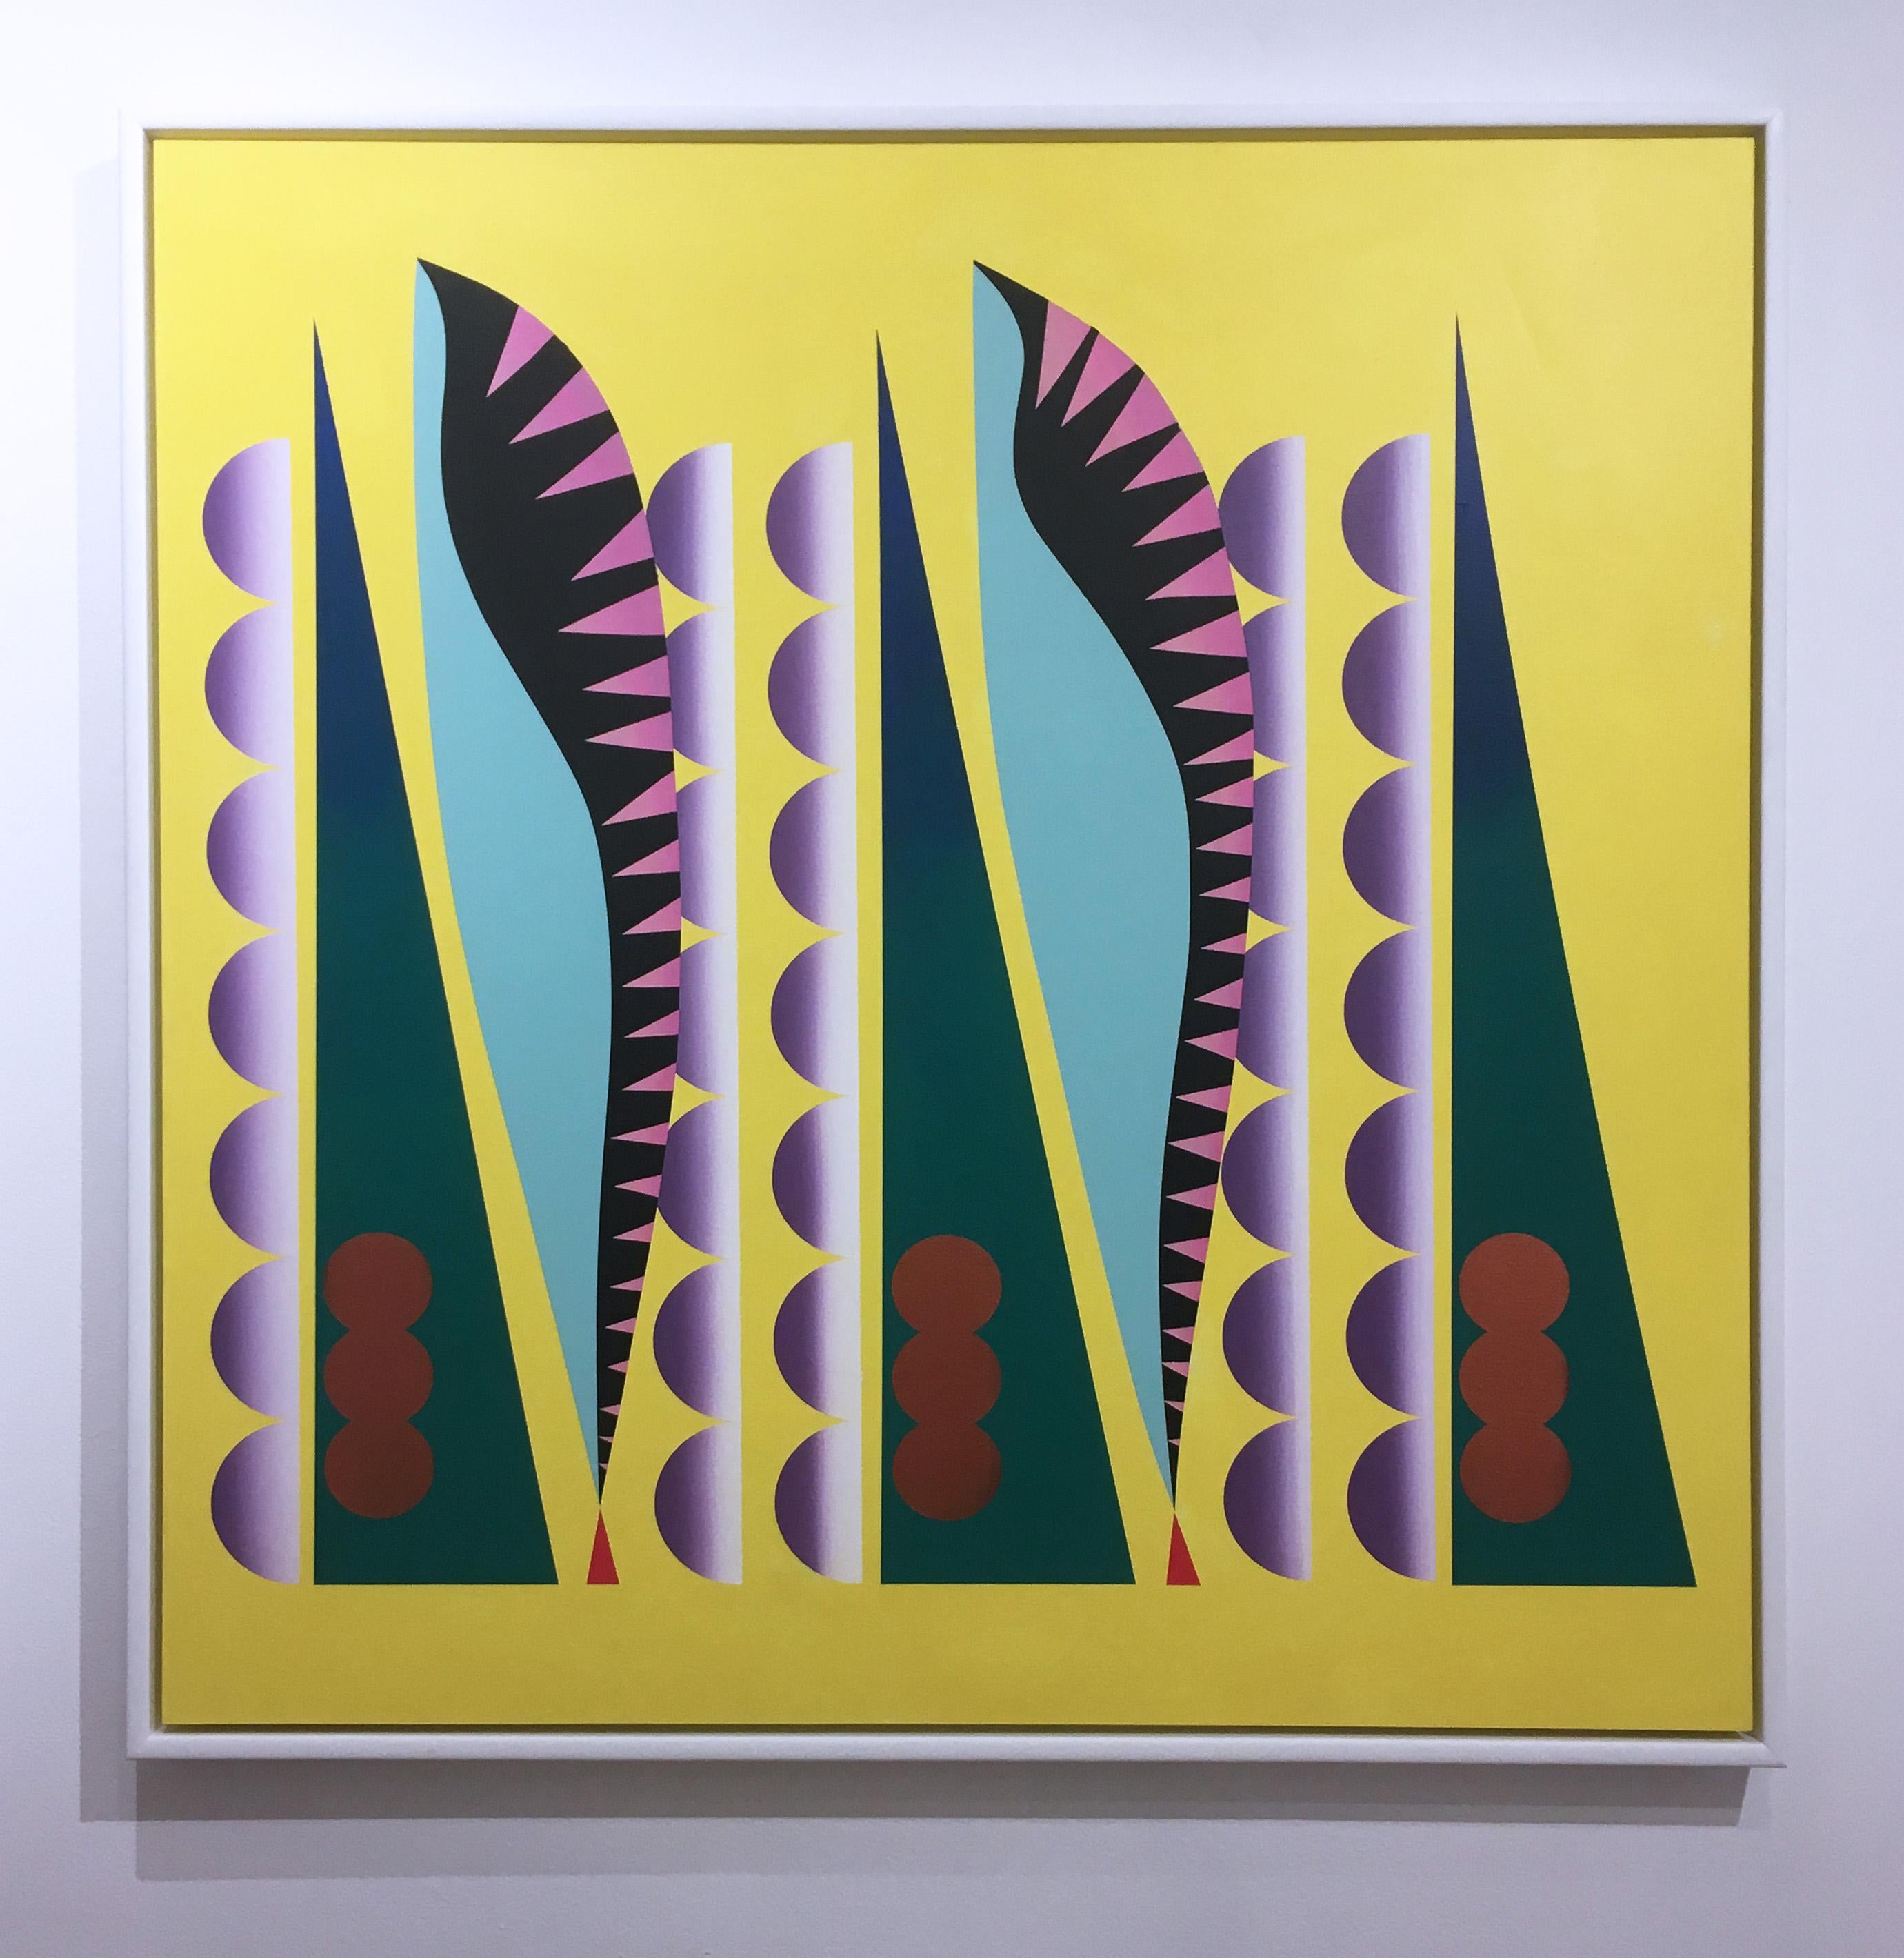 Telesce, 2018, acrylic on canvas, abstract geometric, yellow, orange, purple - Abstract Geometric Painting by Debra Lynn Manville